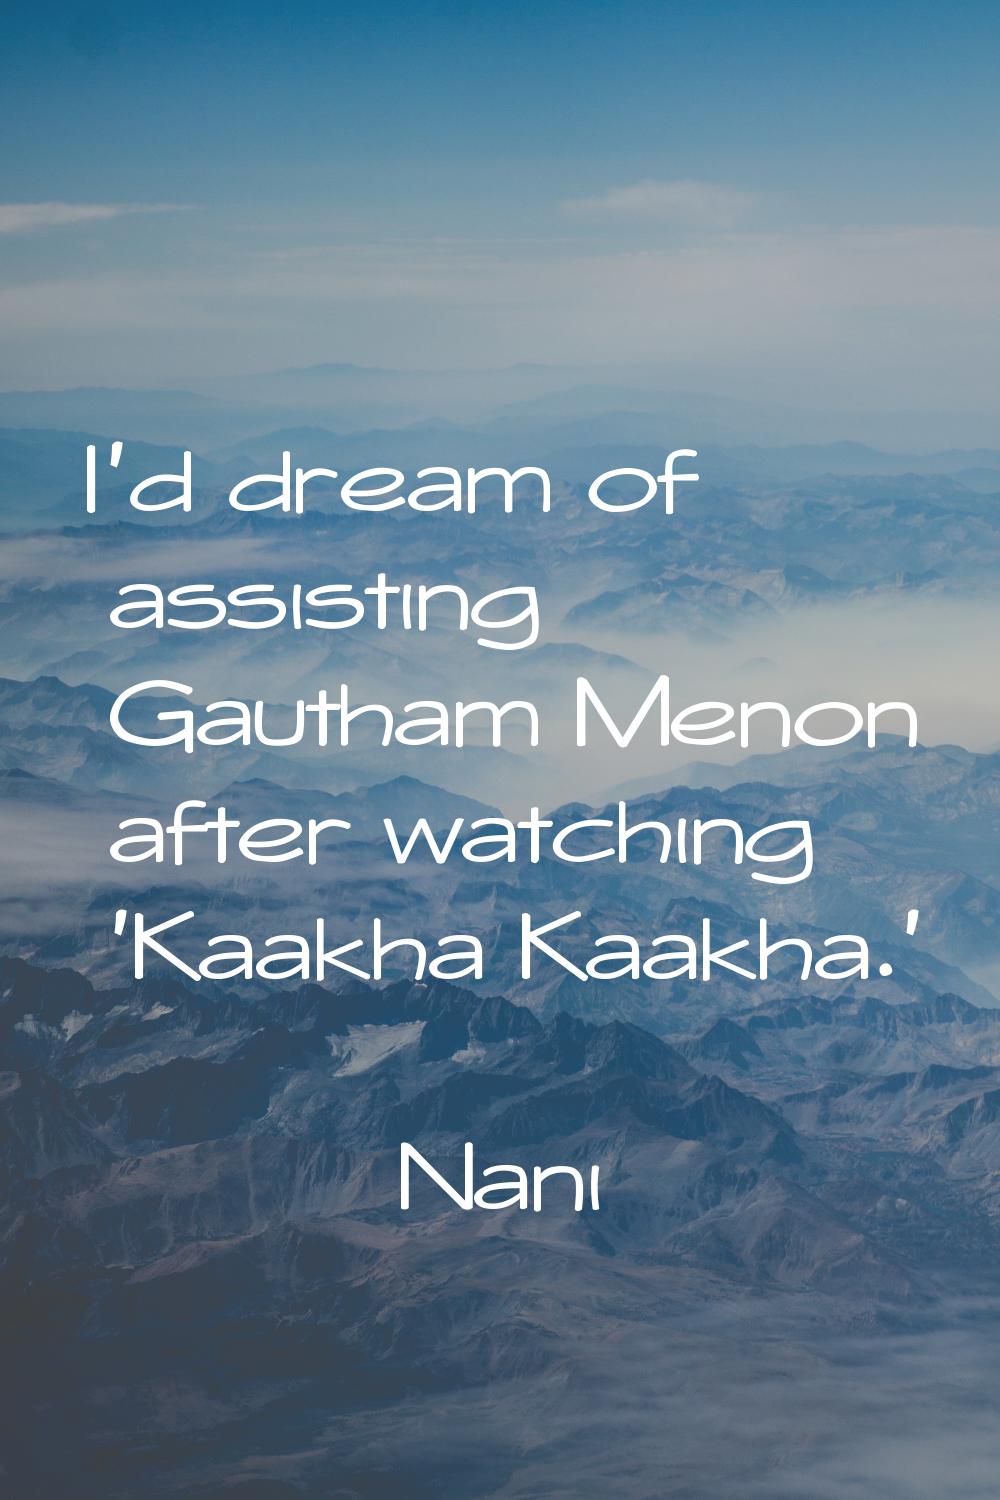 I'd dream of assisting Gautham Menon after watching 'Kaakha Kaakha.'